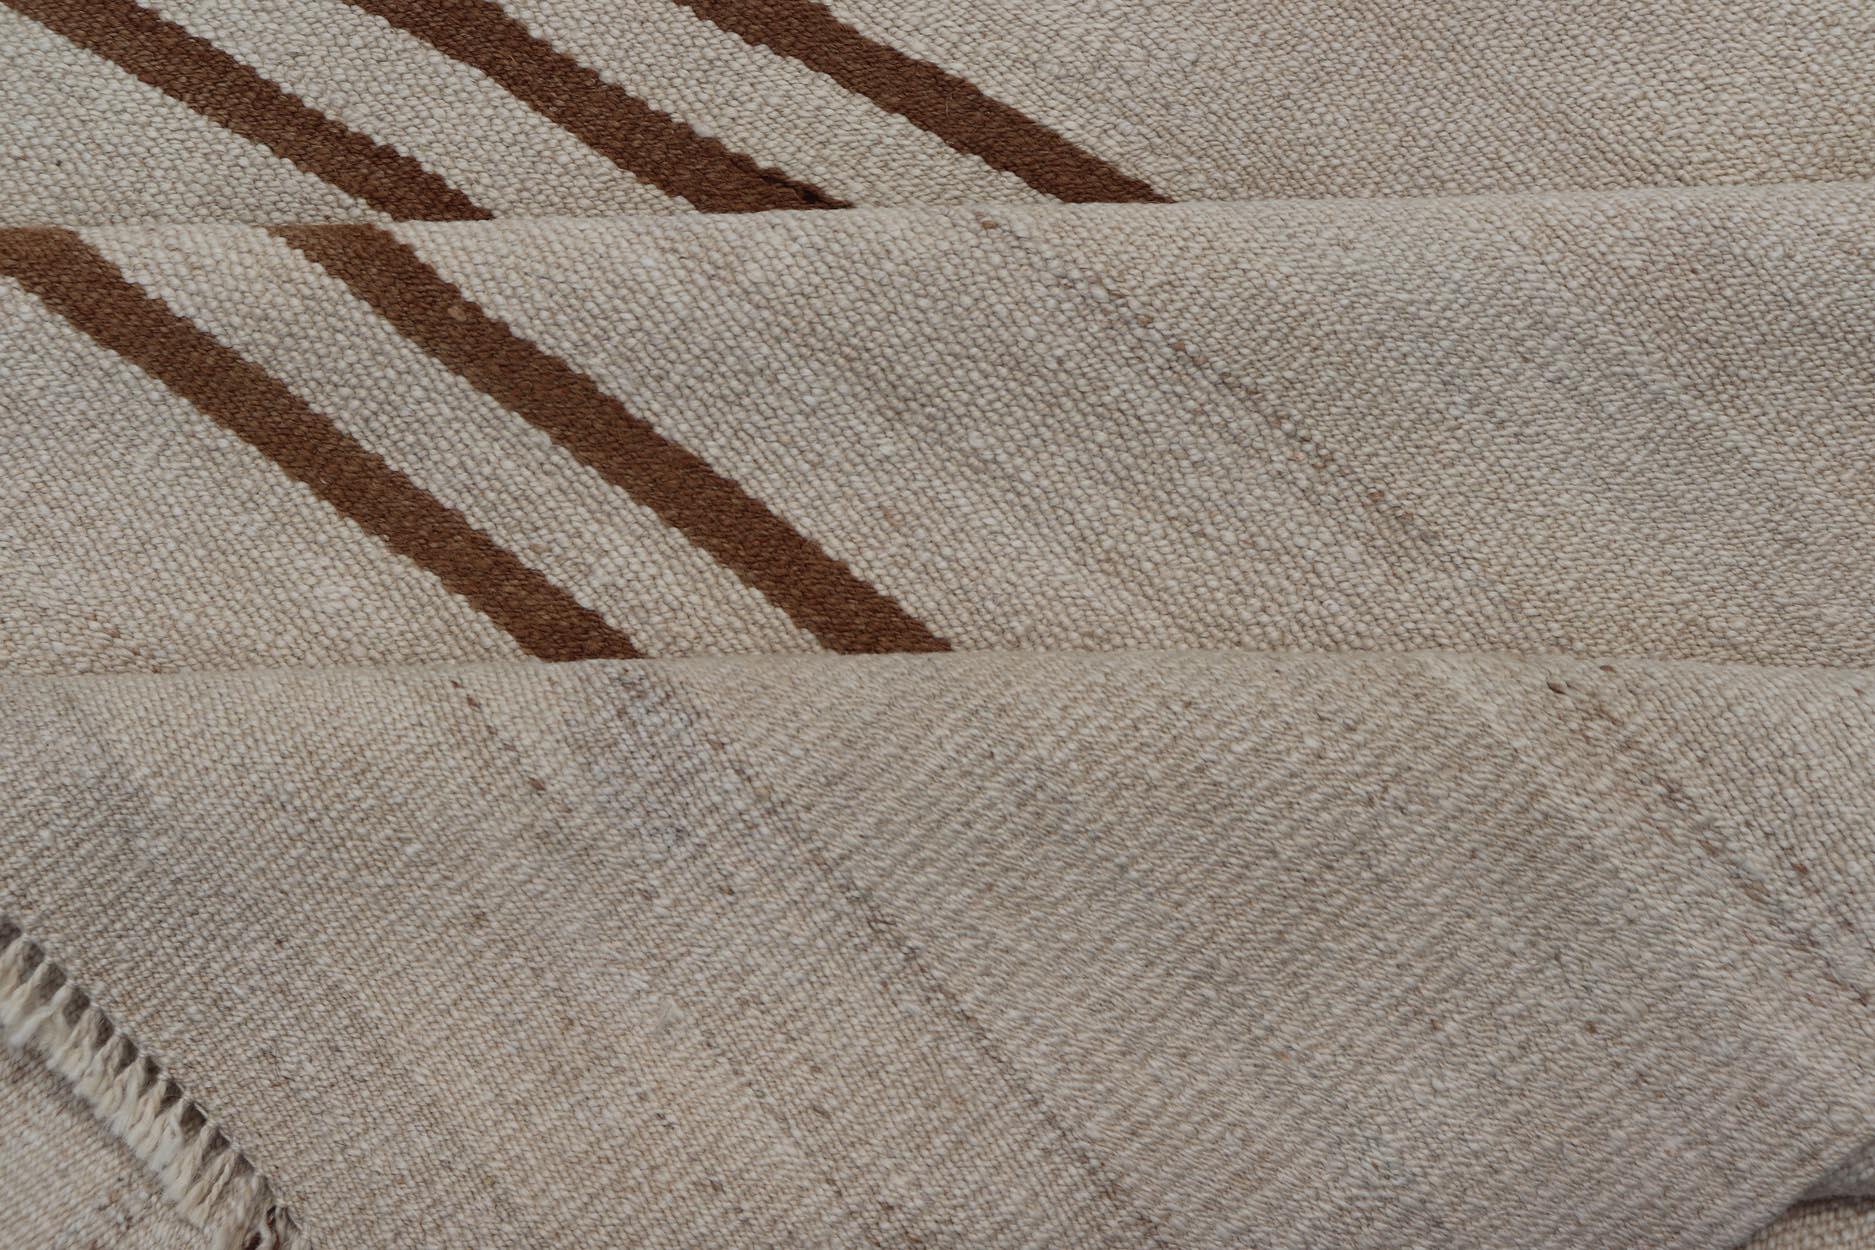 Flat-Weave Kilim Vintage Rug Turkey with Horizontal Stripes in Ivory & Brown For Sale 4